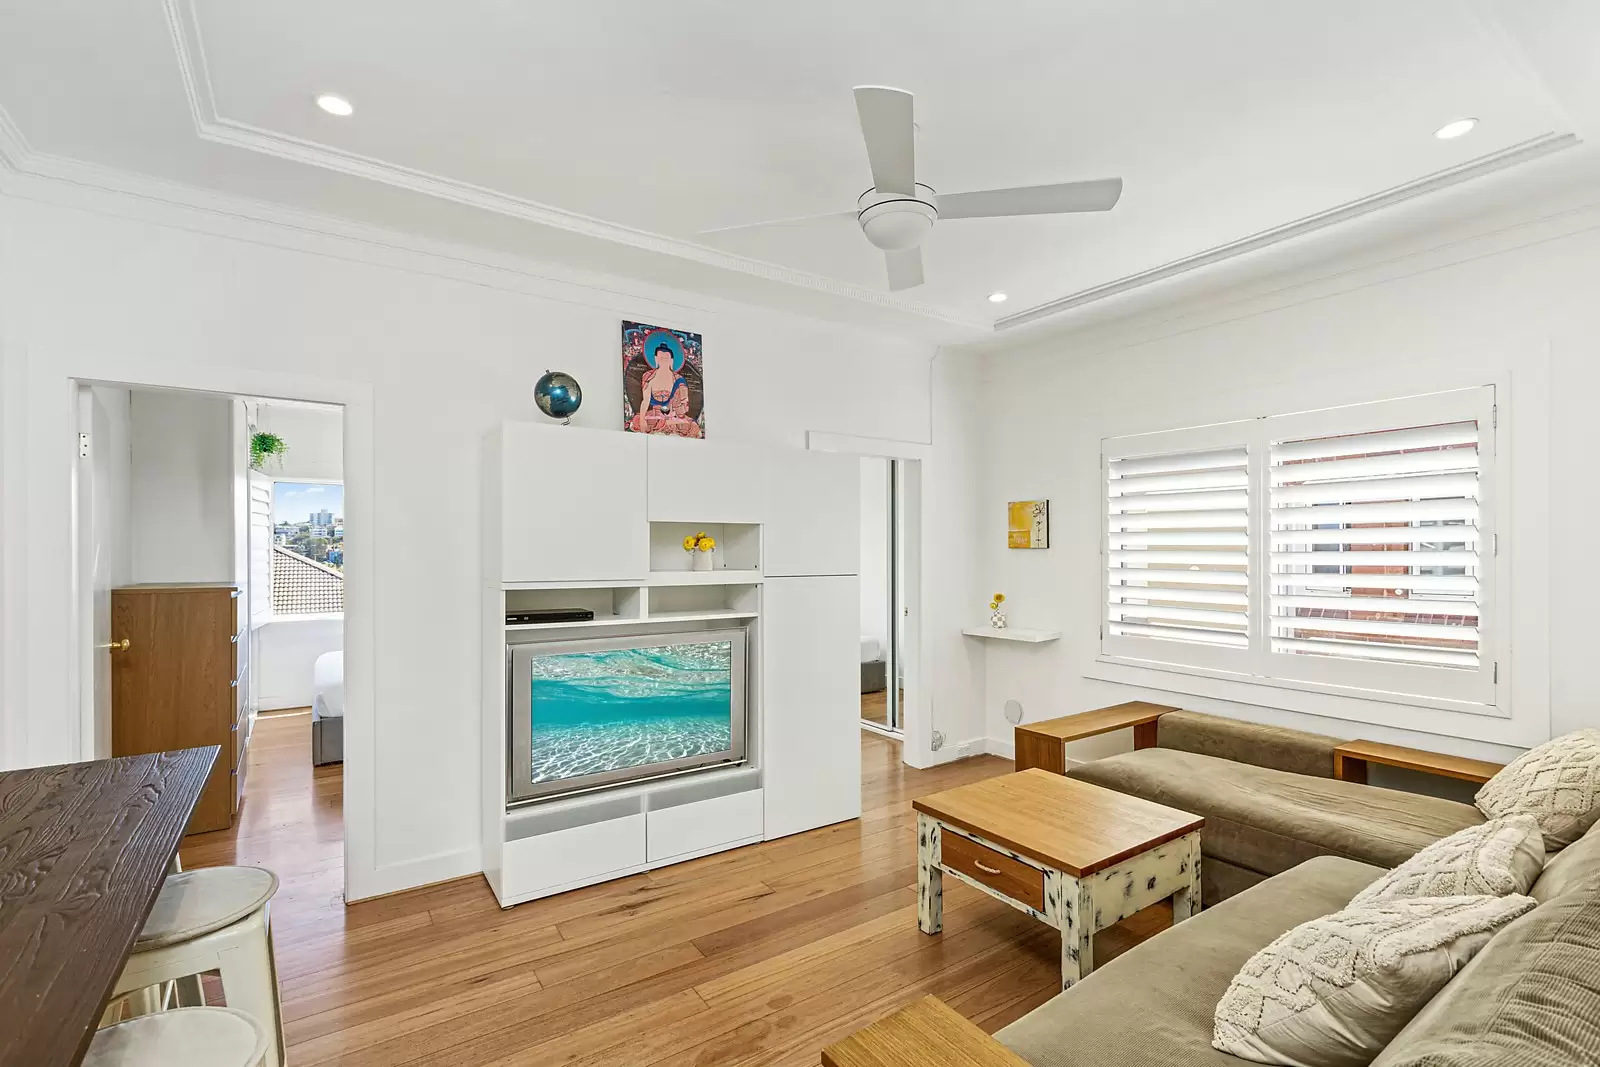 9/44 Ramsgate Avenue, Bondi Beach Sold by Sydney Sotheby's International Realty - image 6